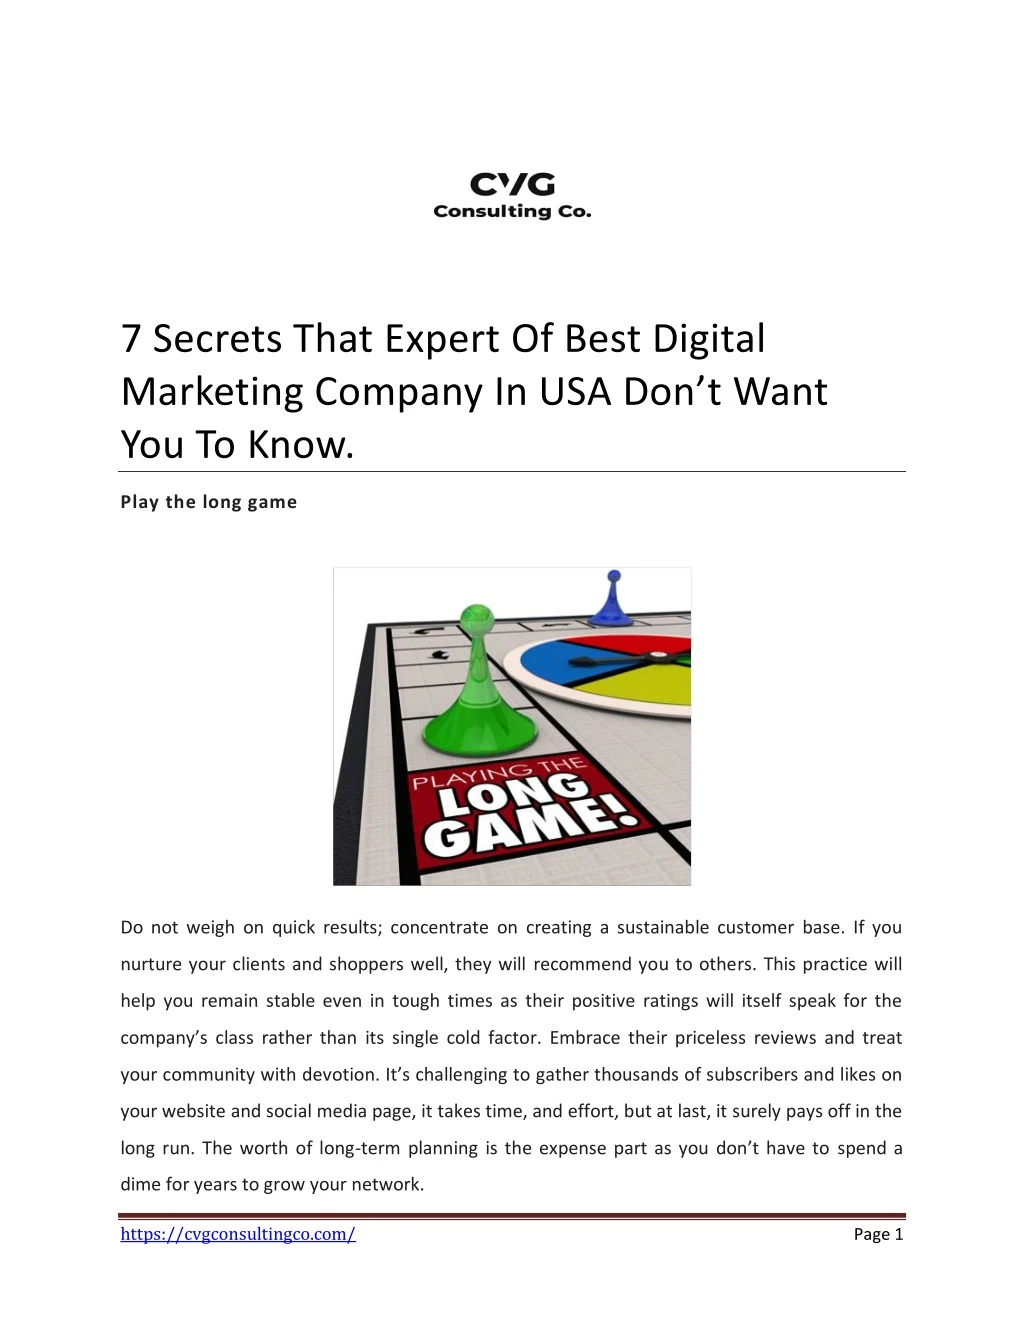 7 secrets that expert of best digital marketing